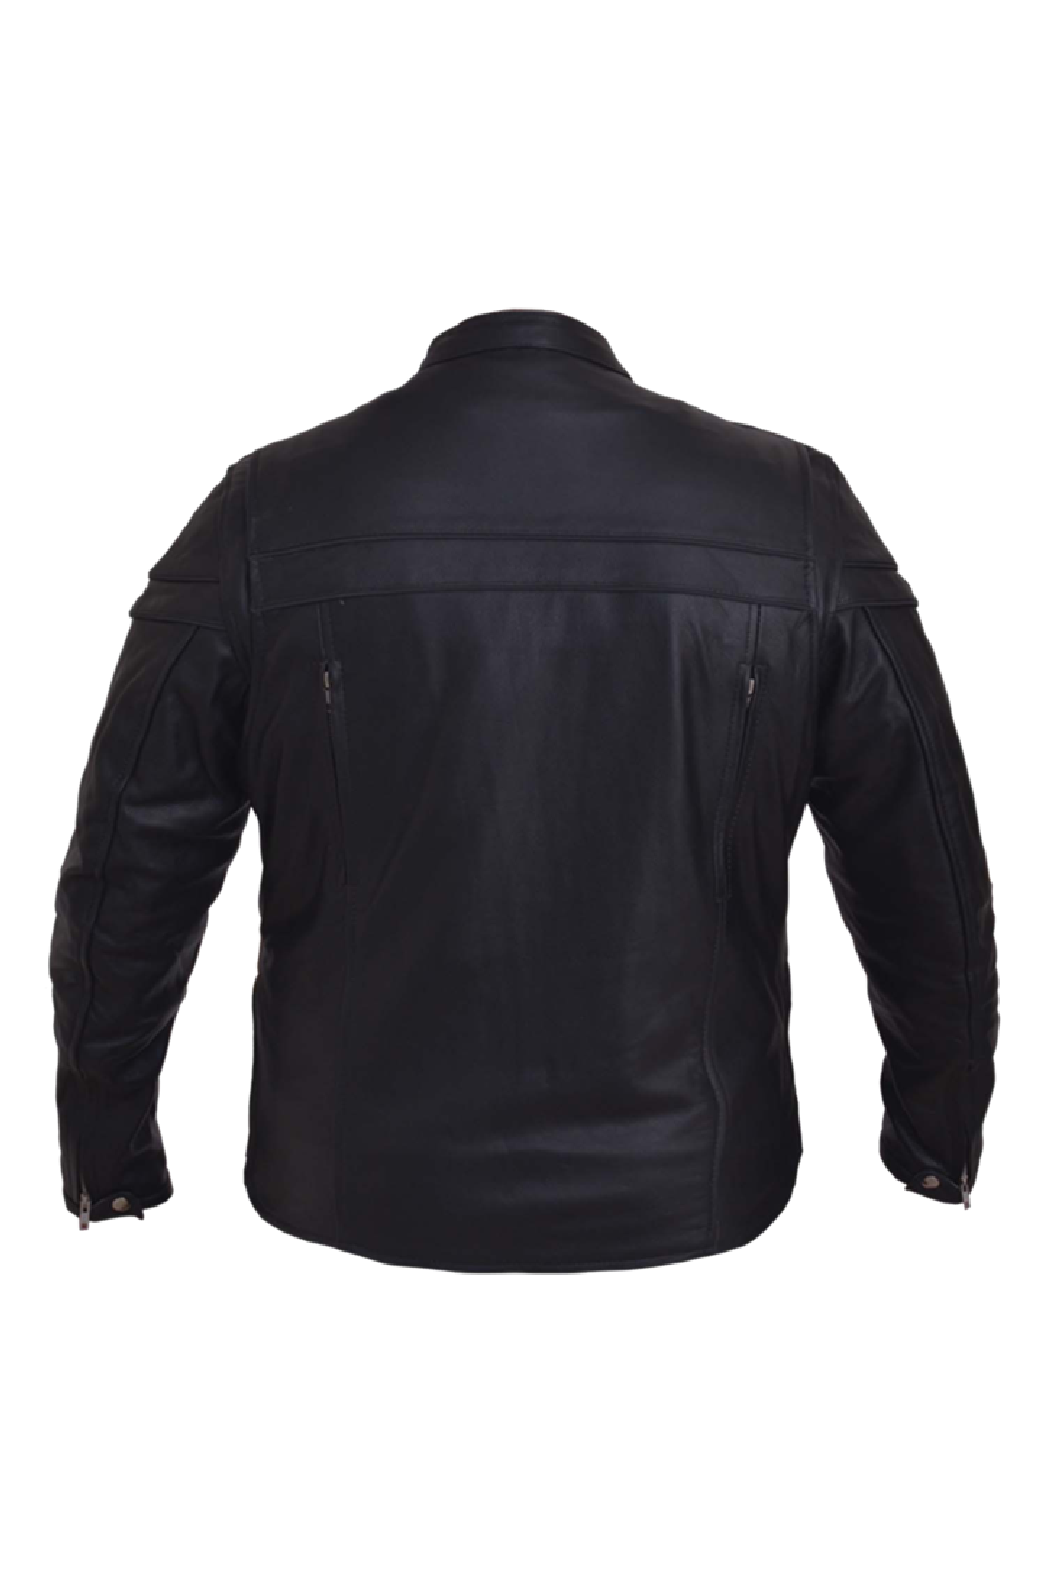 Unik Cowhide Premium Leather Jacket